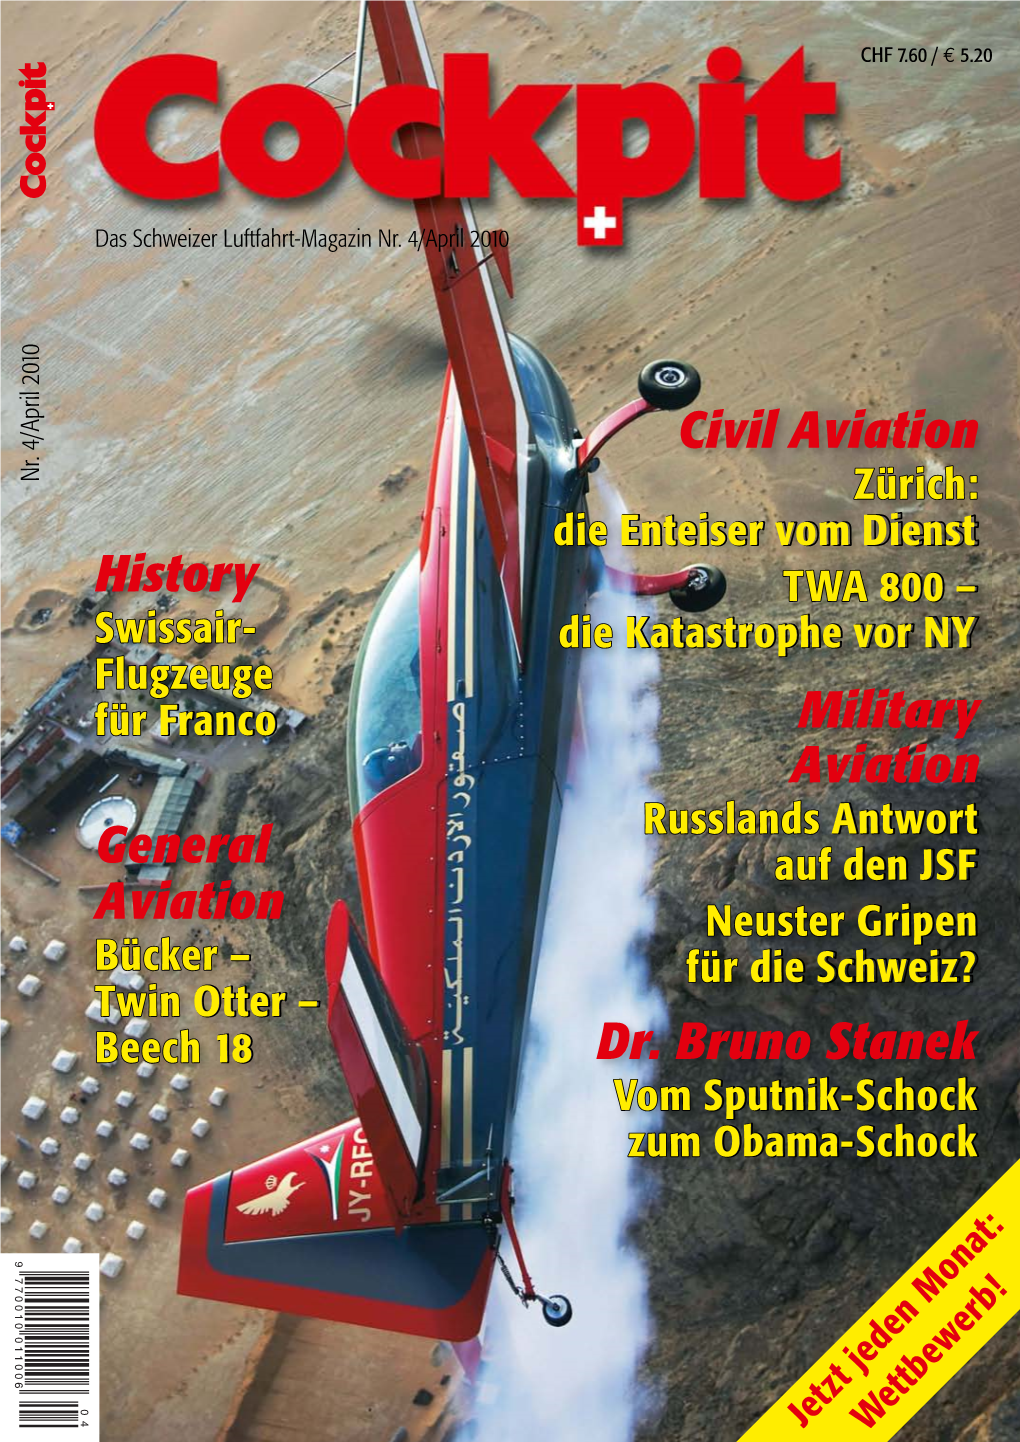 Military Aviation Civil Aviation Dr. Bruno Stanek General Aviation History